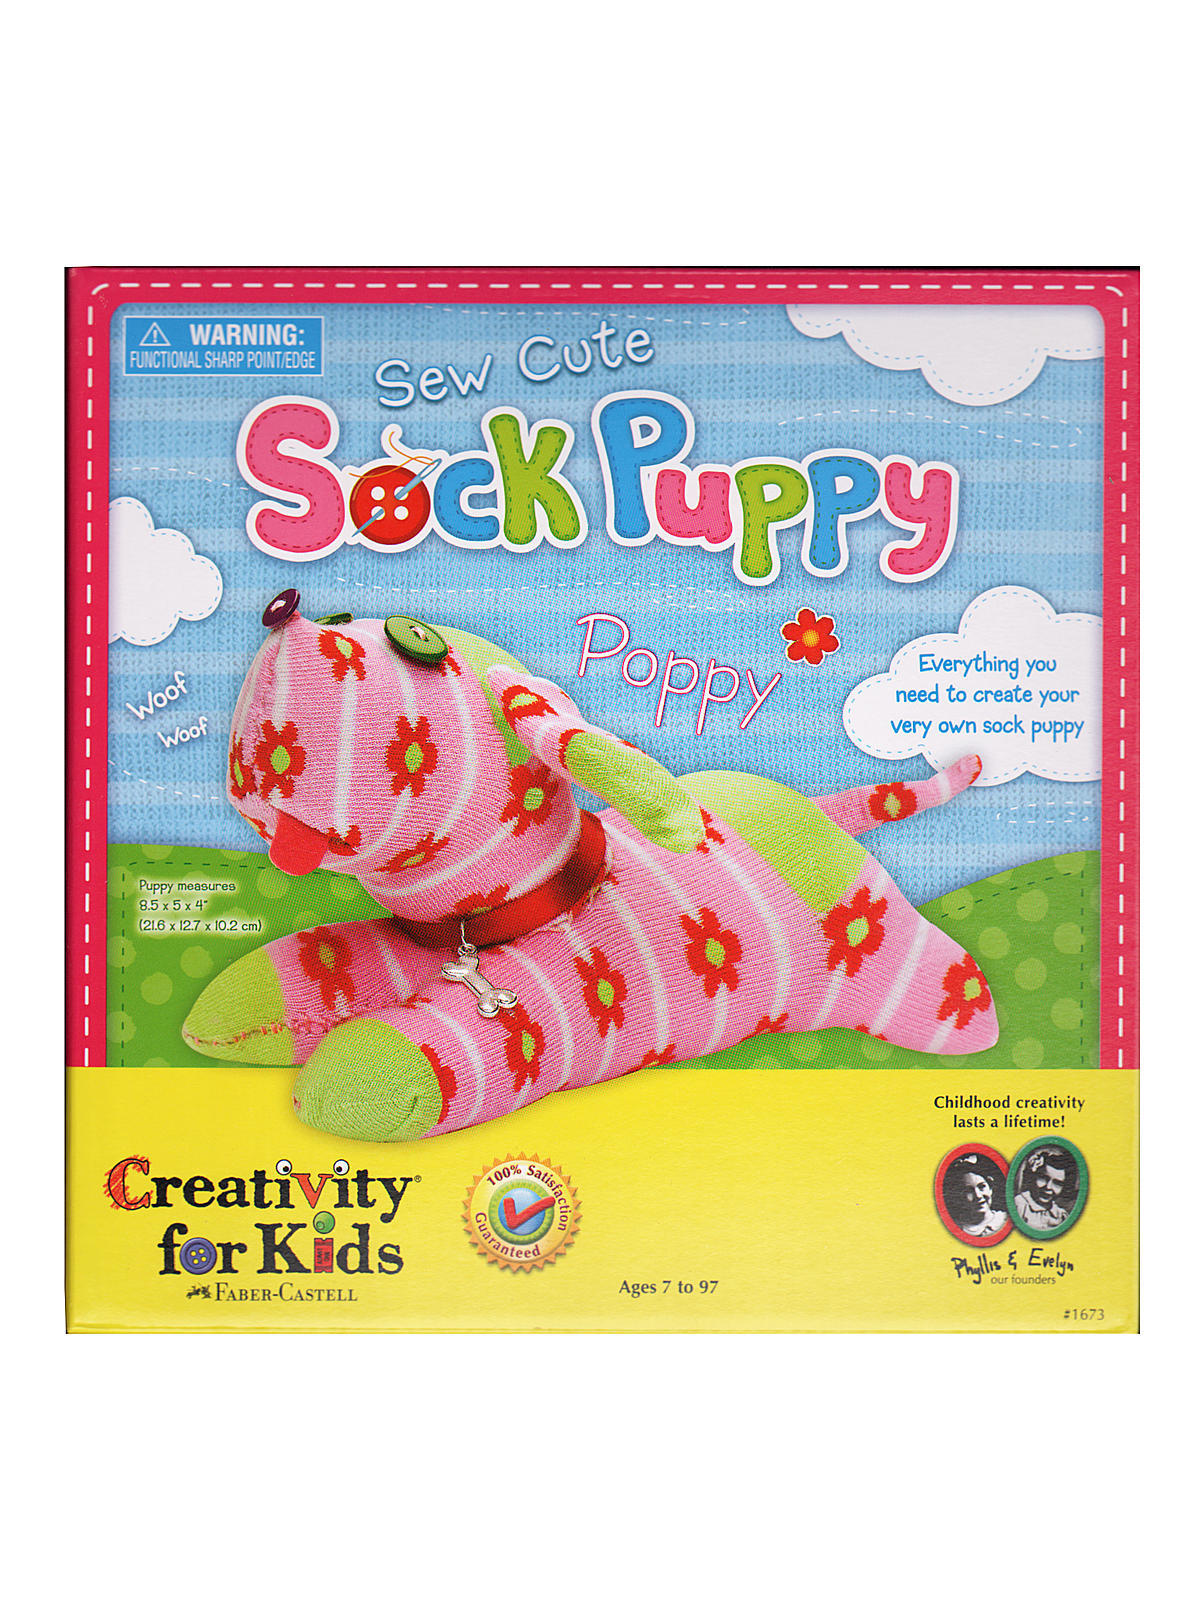 Sew Cute Sock Puppy Each